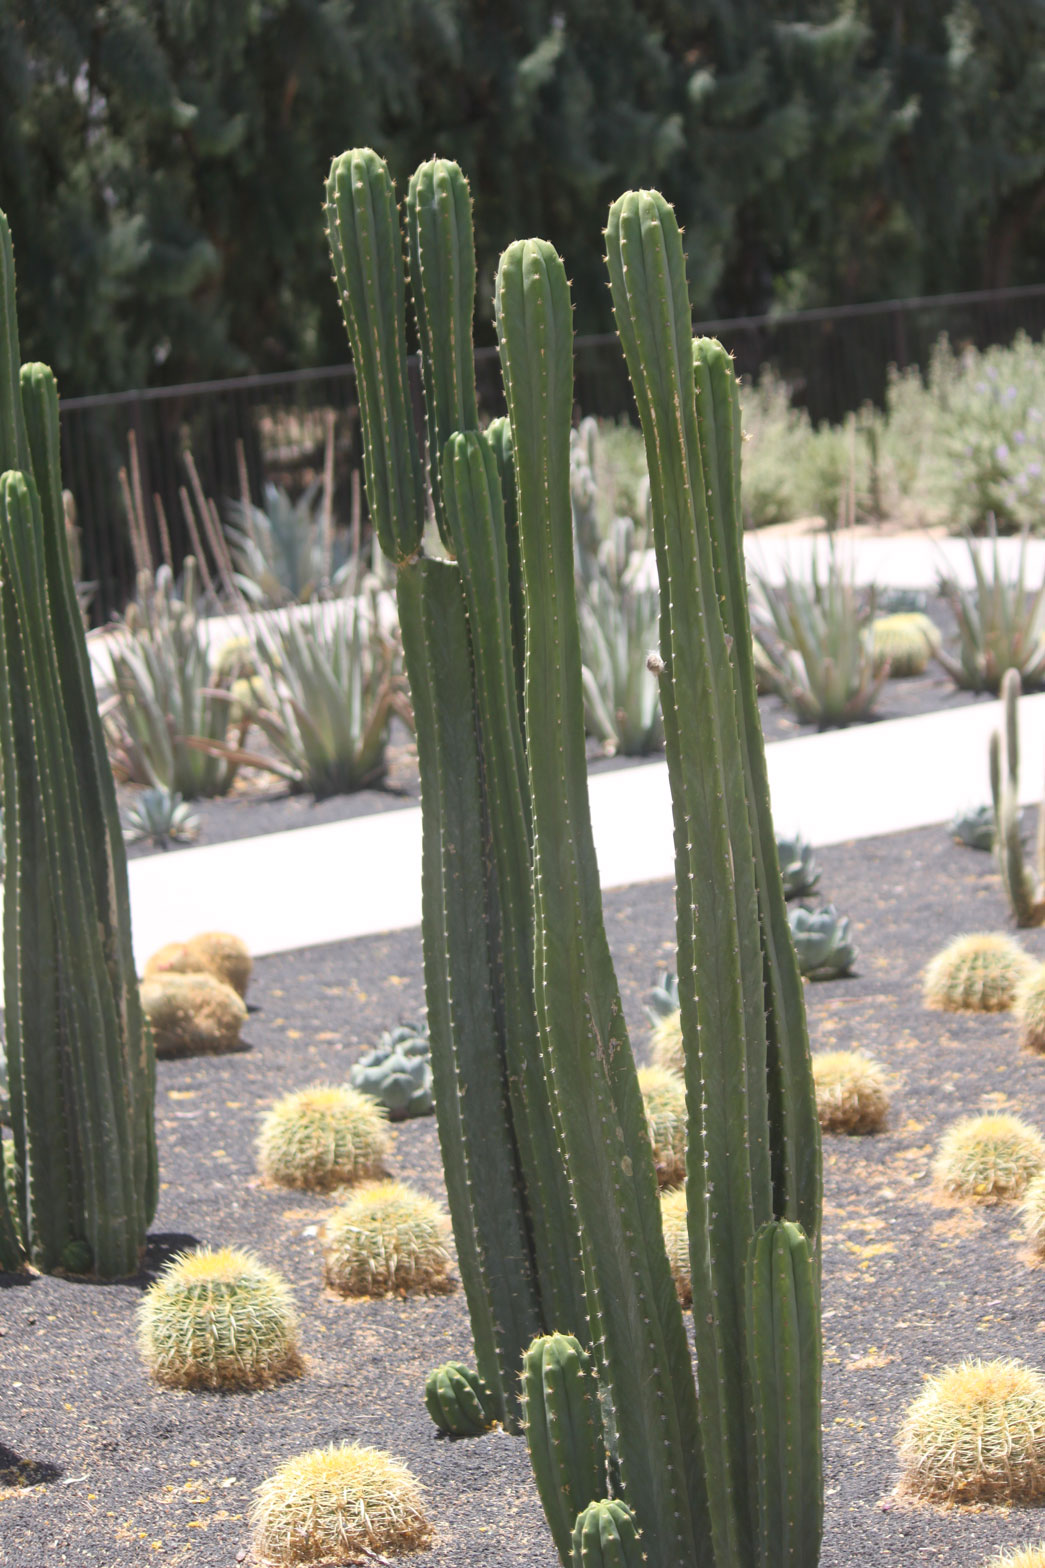 A San Pedro Cactus in the specimen bed.